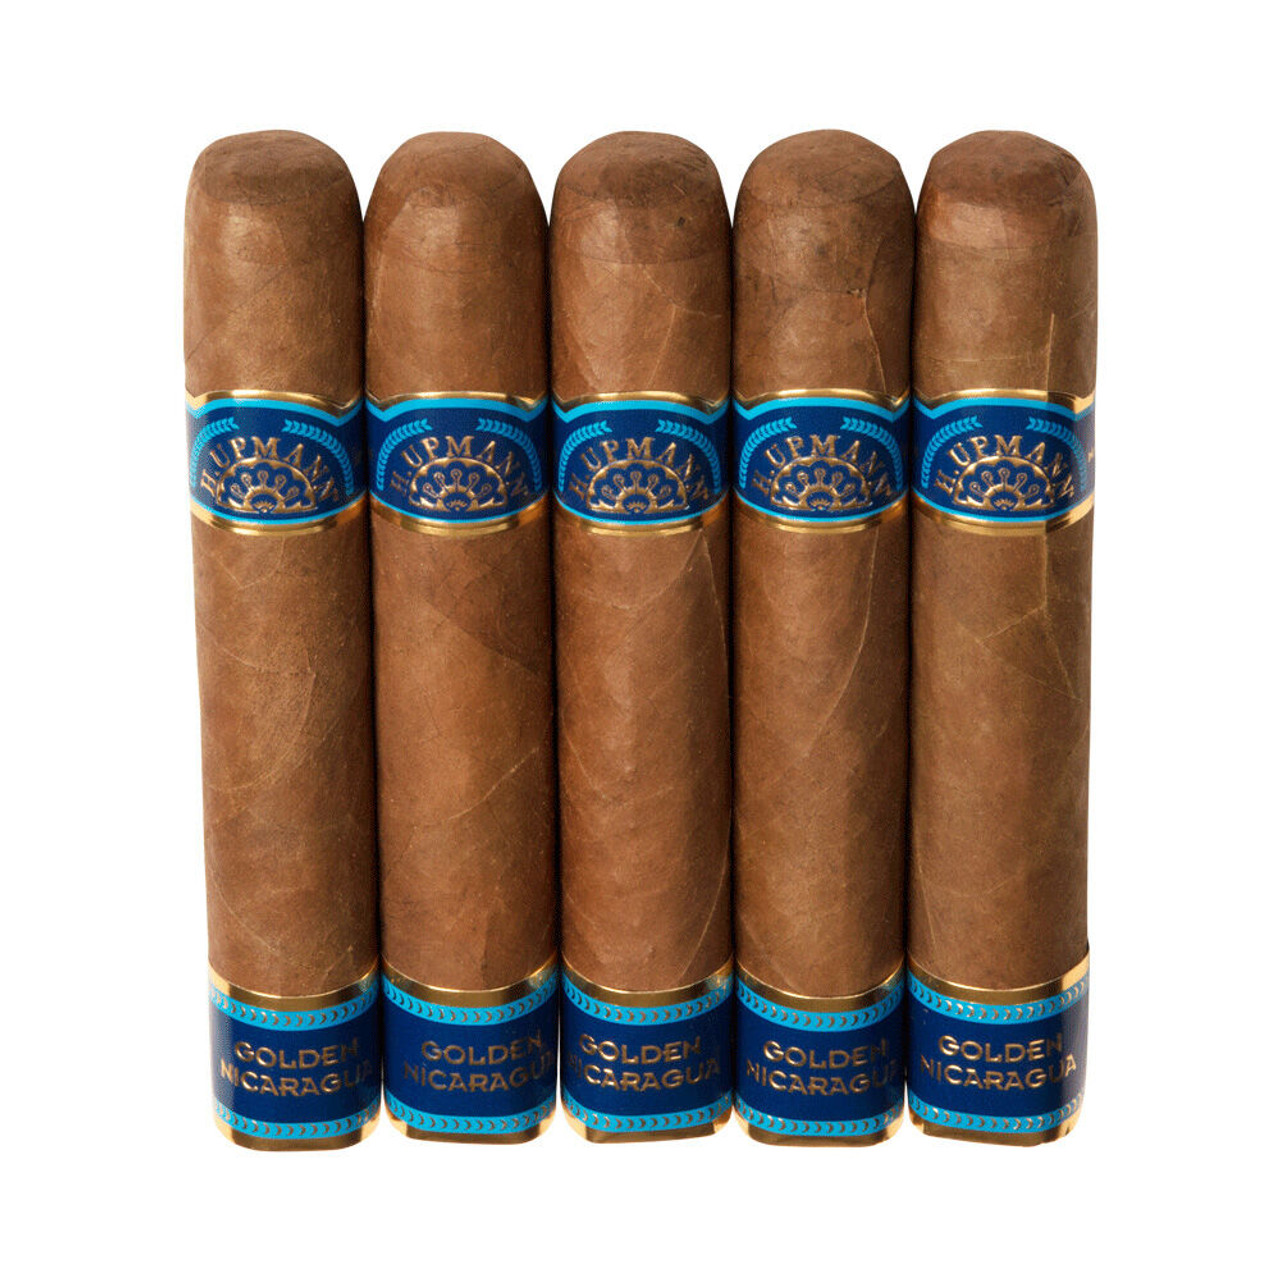 H. Upmann Golden Nicaragua Robusto Cigars - 5 x 54 (Pack of 5)